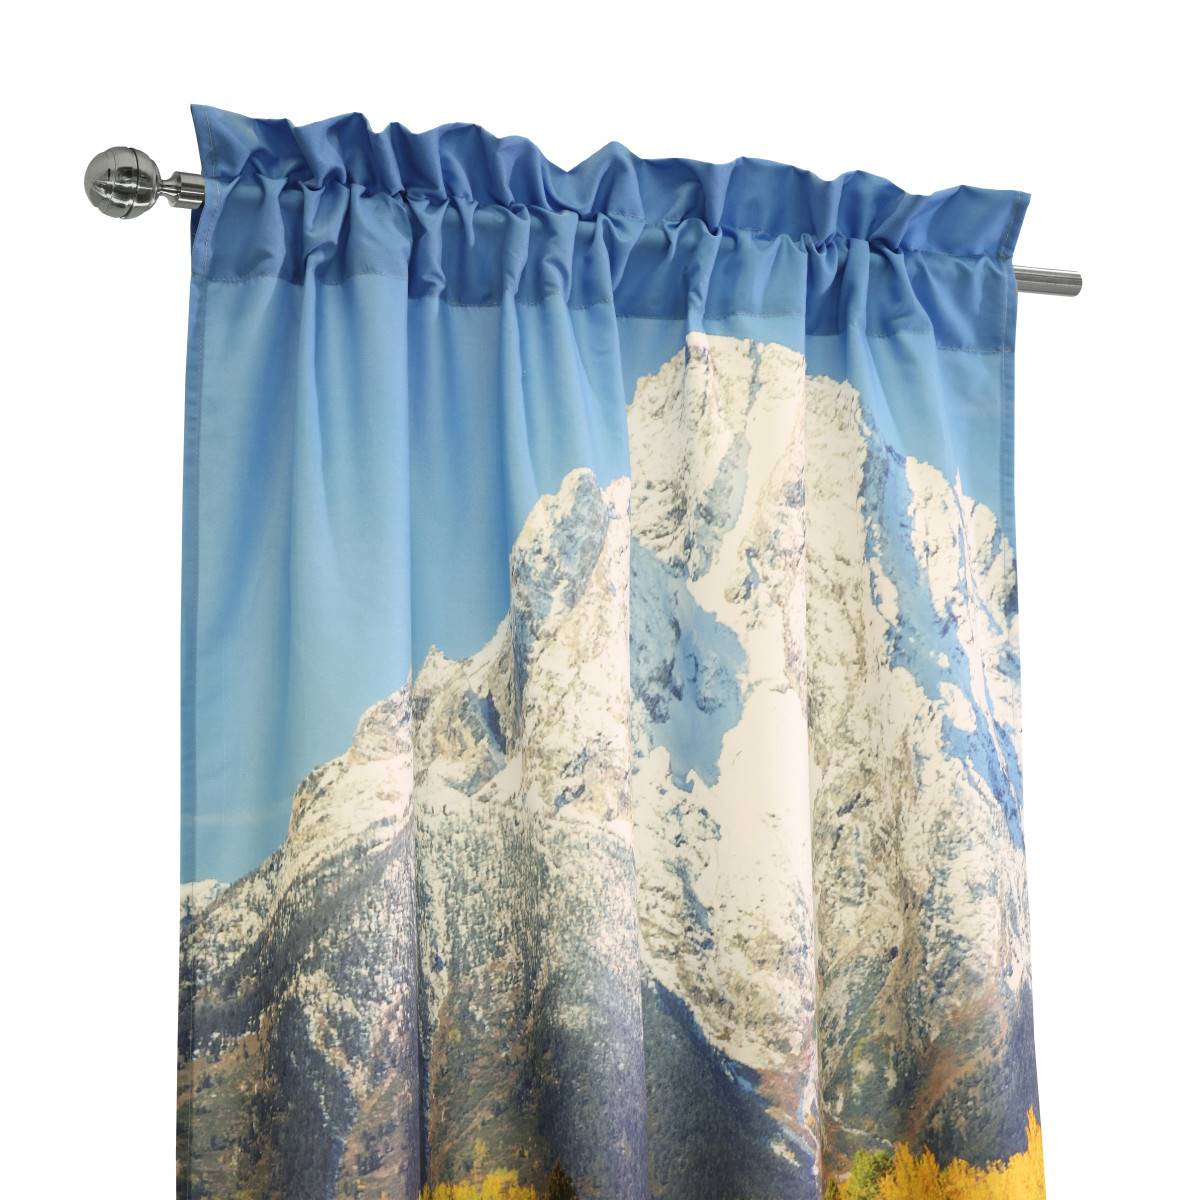 Habitat Photo Reel Mountains Curtain Panel Pair